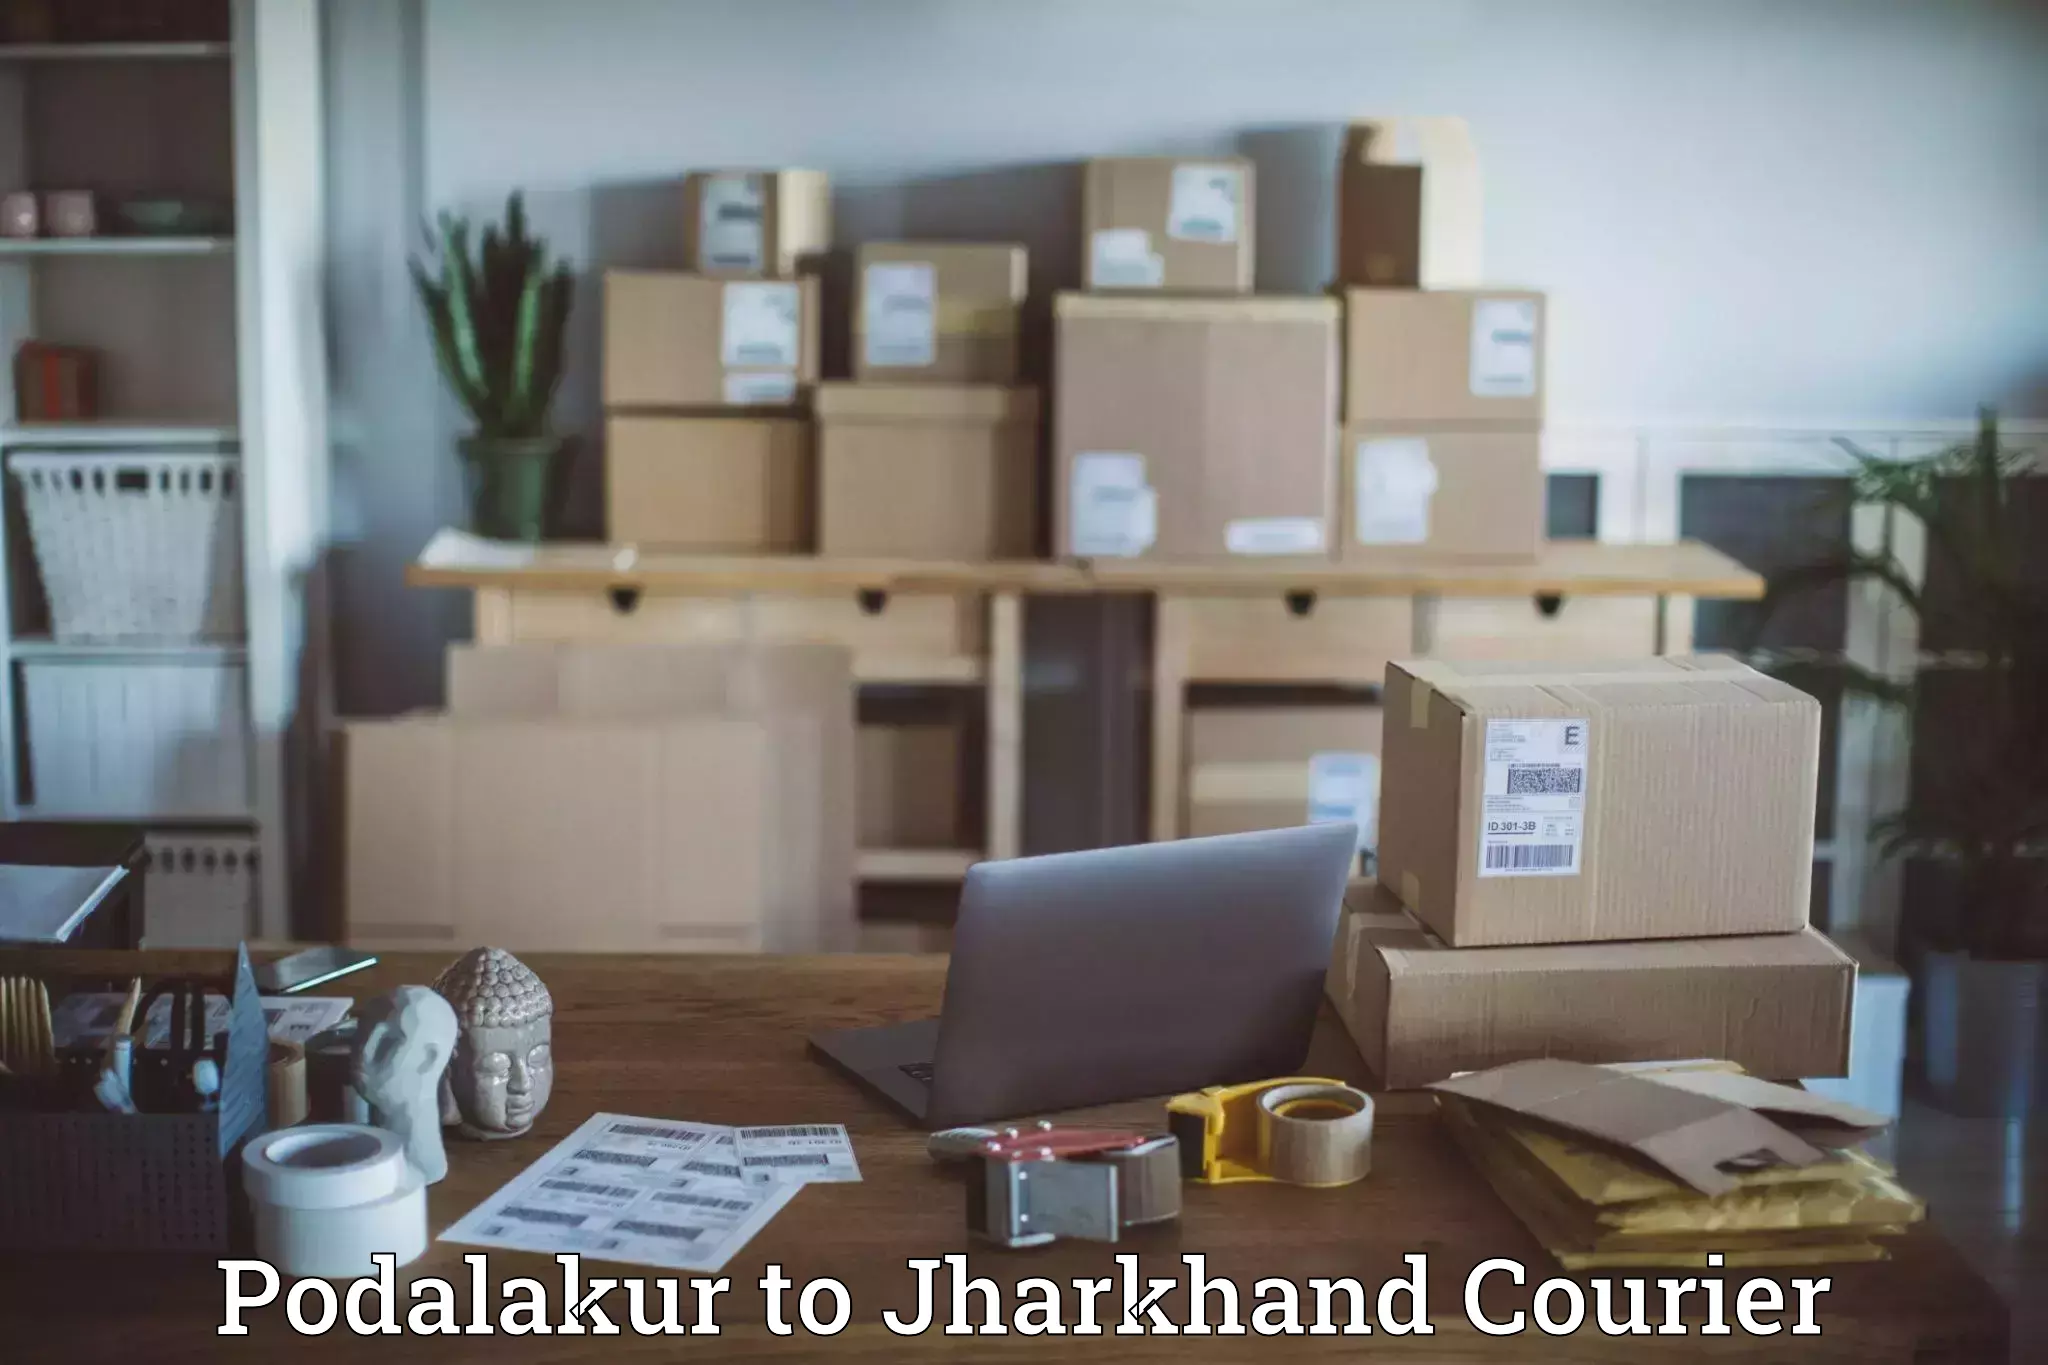 Global logistics network Podalakur to Jamshedpur